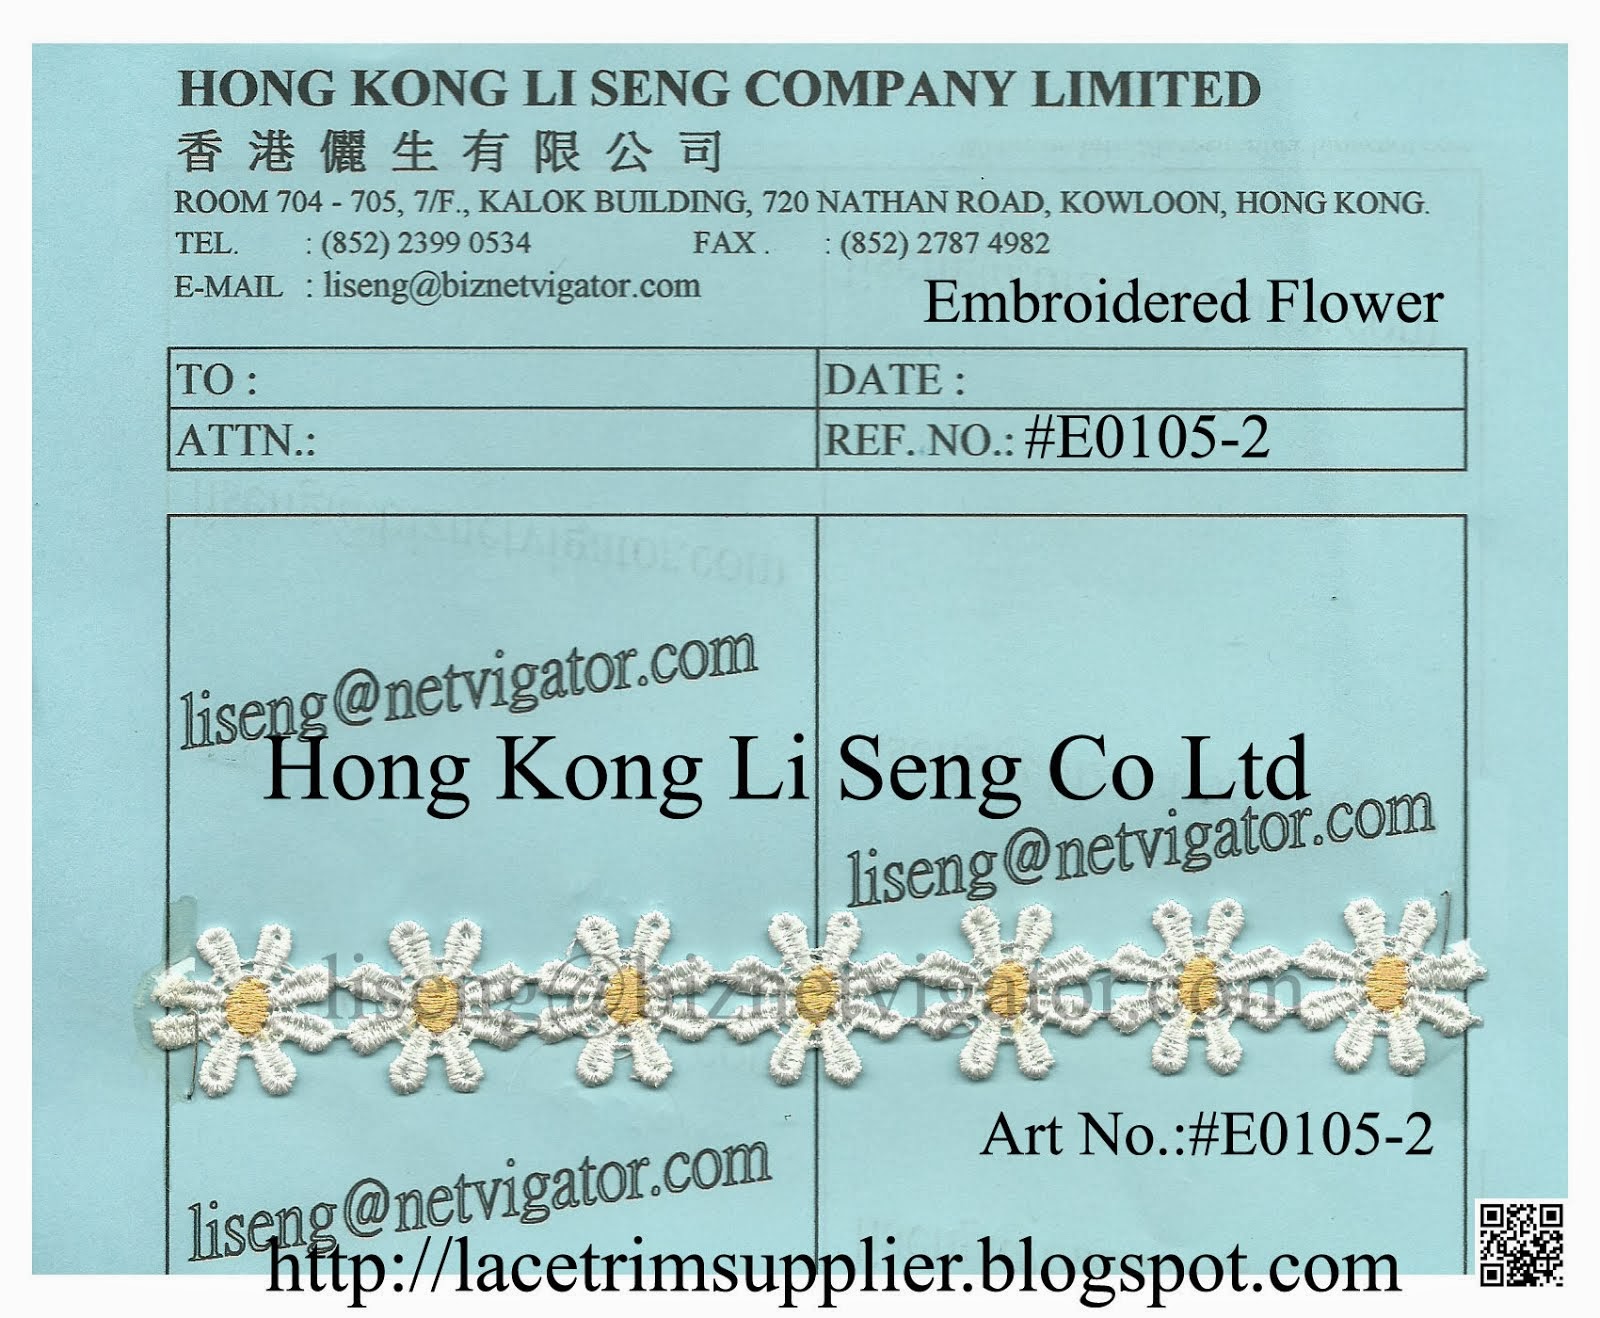 Embroidered Lace Flower Manufacturer - Hong Kong Li Seng Co Ltd